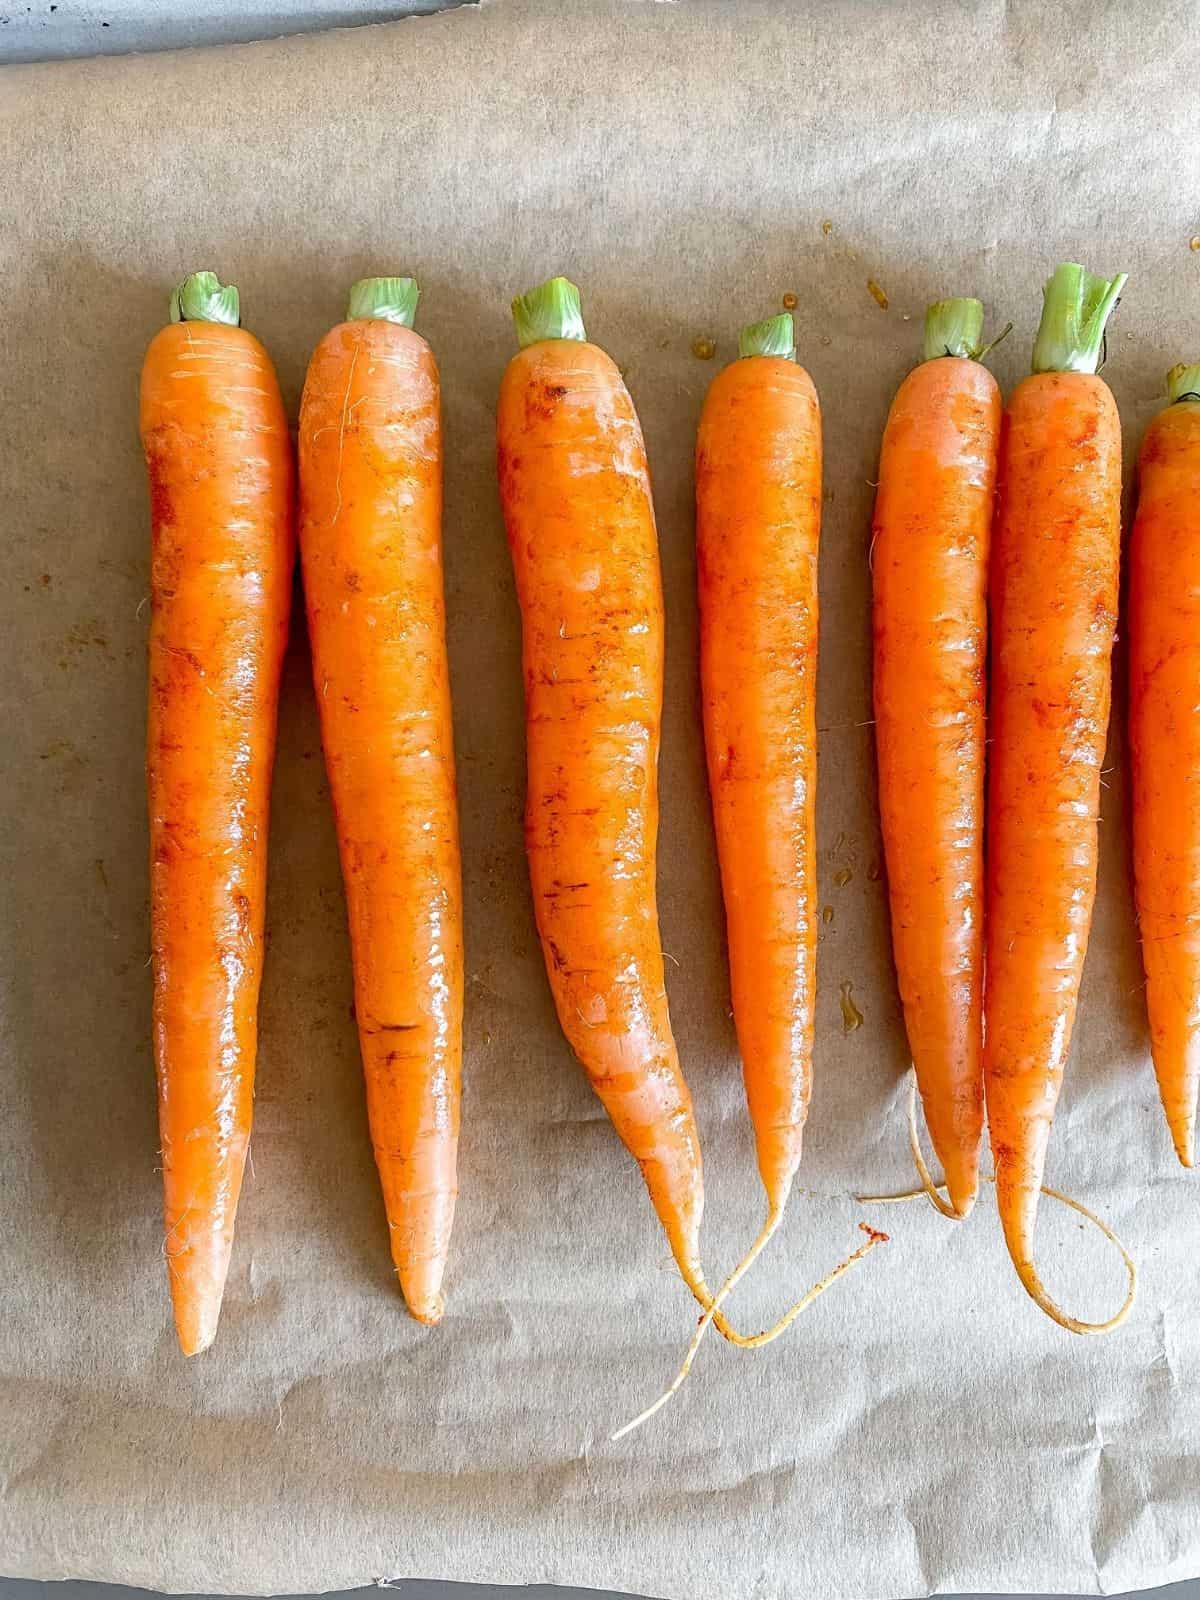 carrots on a baking tray.